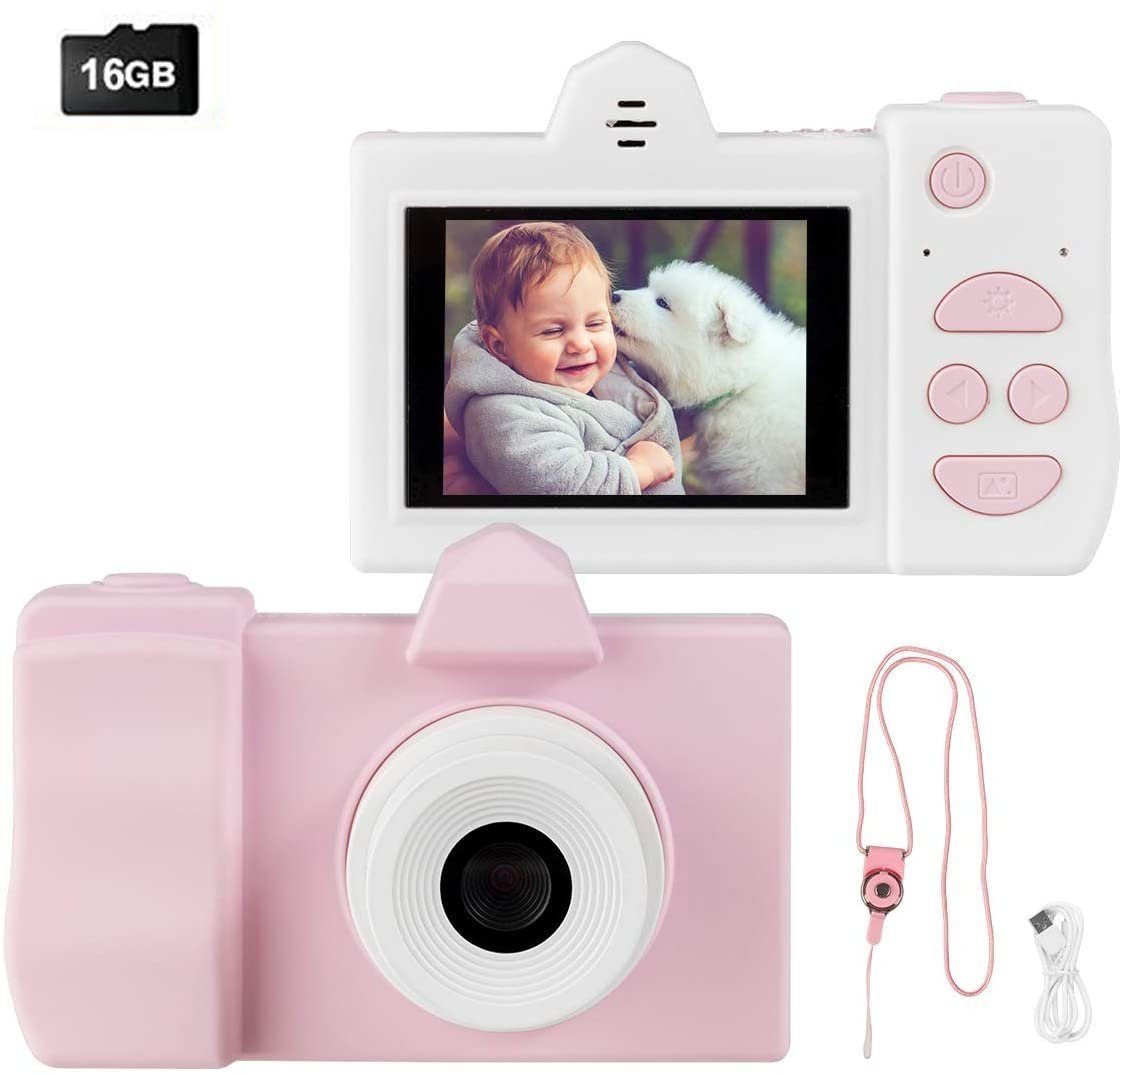 COSTWAY »Kinder Digitalkamera, Videokamera« Kinderkamera (8MP/720P HD,  inkl. Trageband, 16GB-Speicherkarte) online kaufen | OTTO